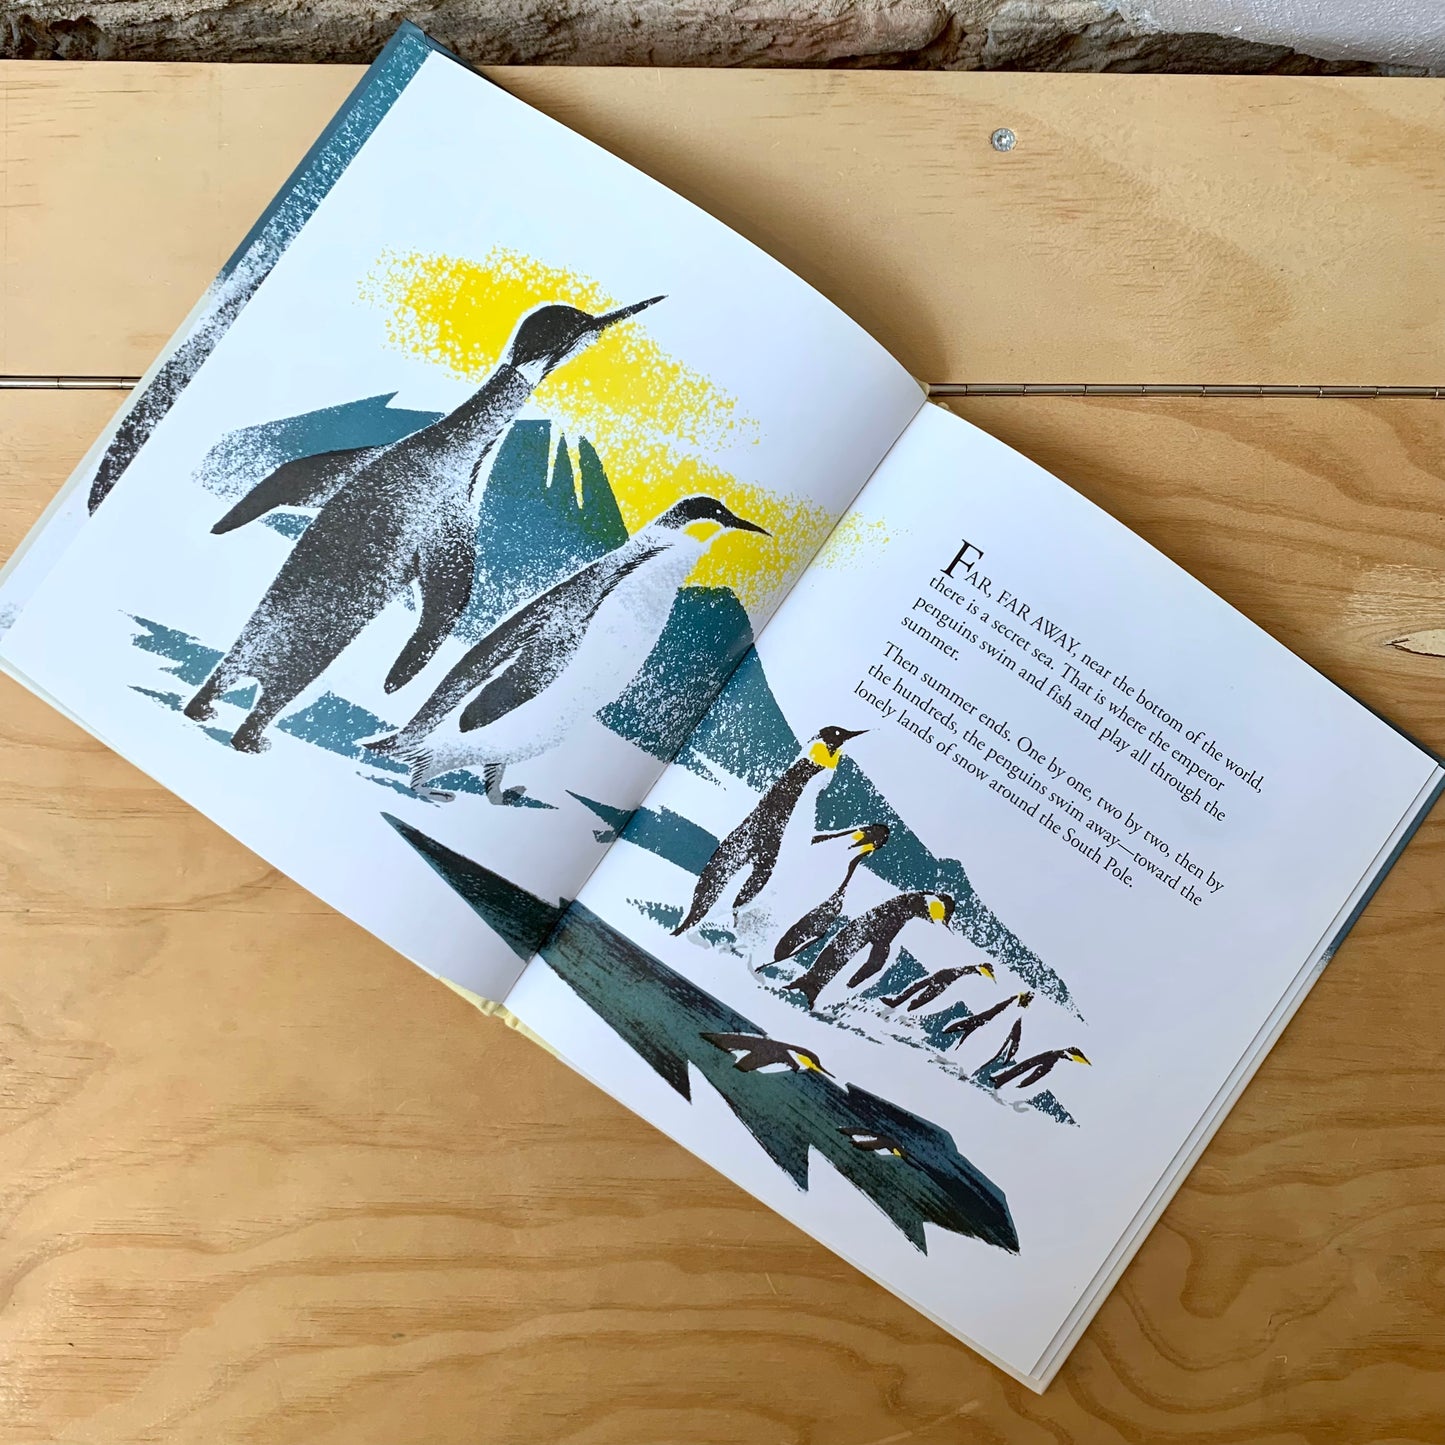 Penguin's Way – Johanna Johnston